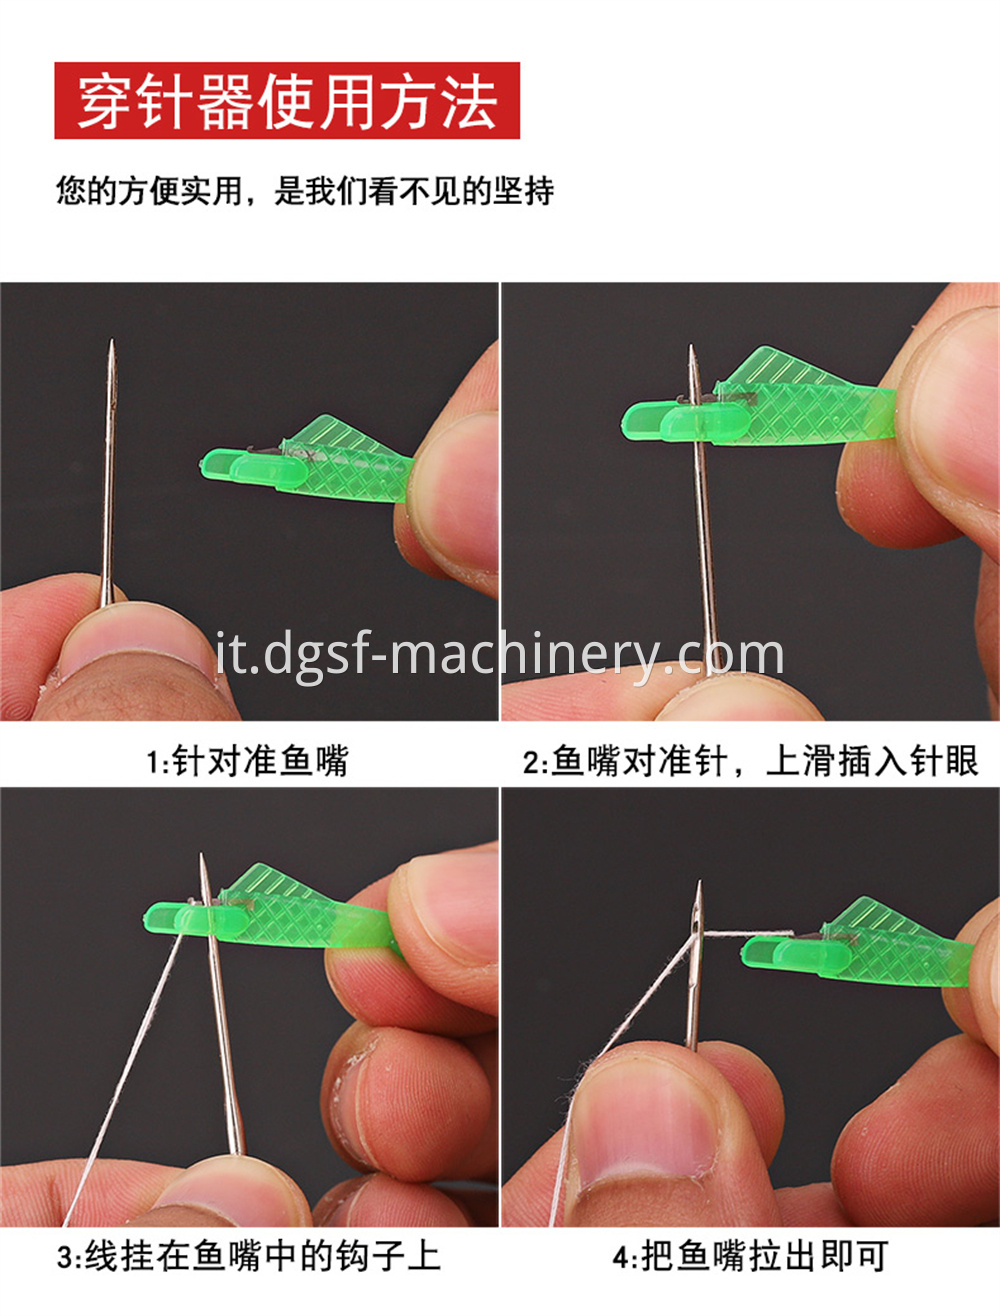 Sewing Machine Needle Threading Device 11 Jpg